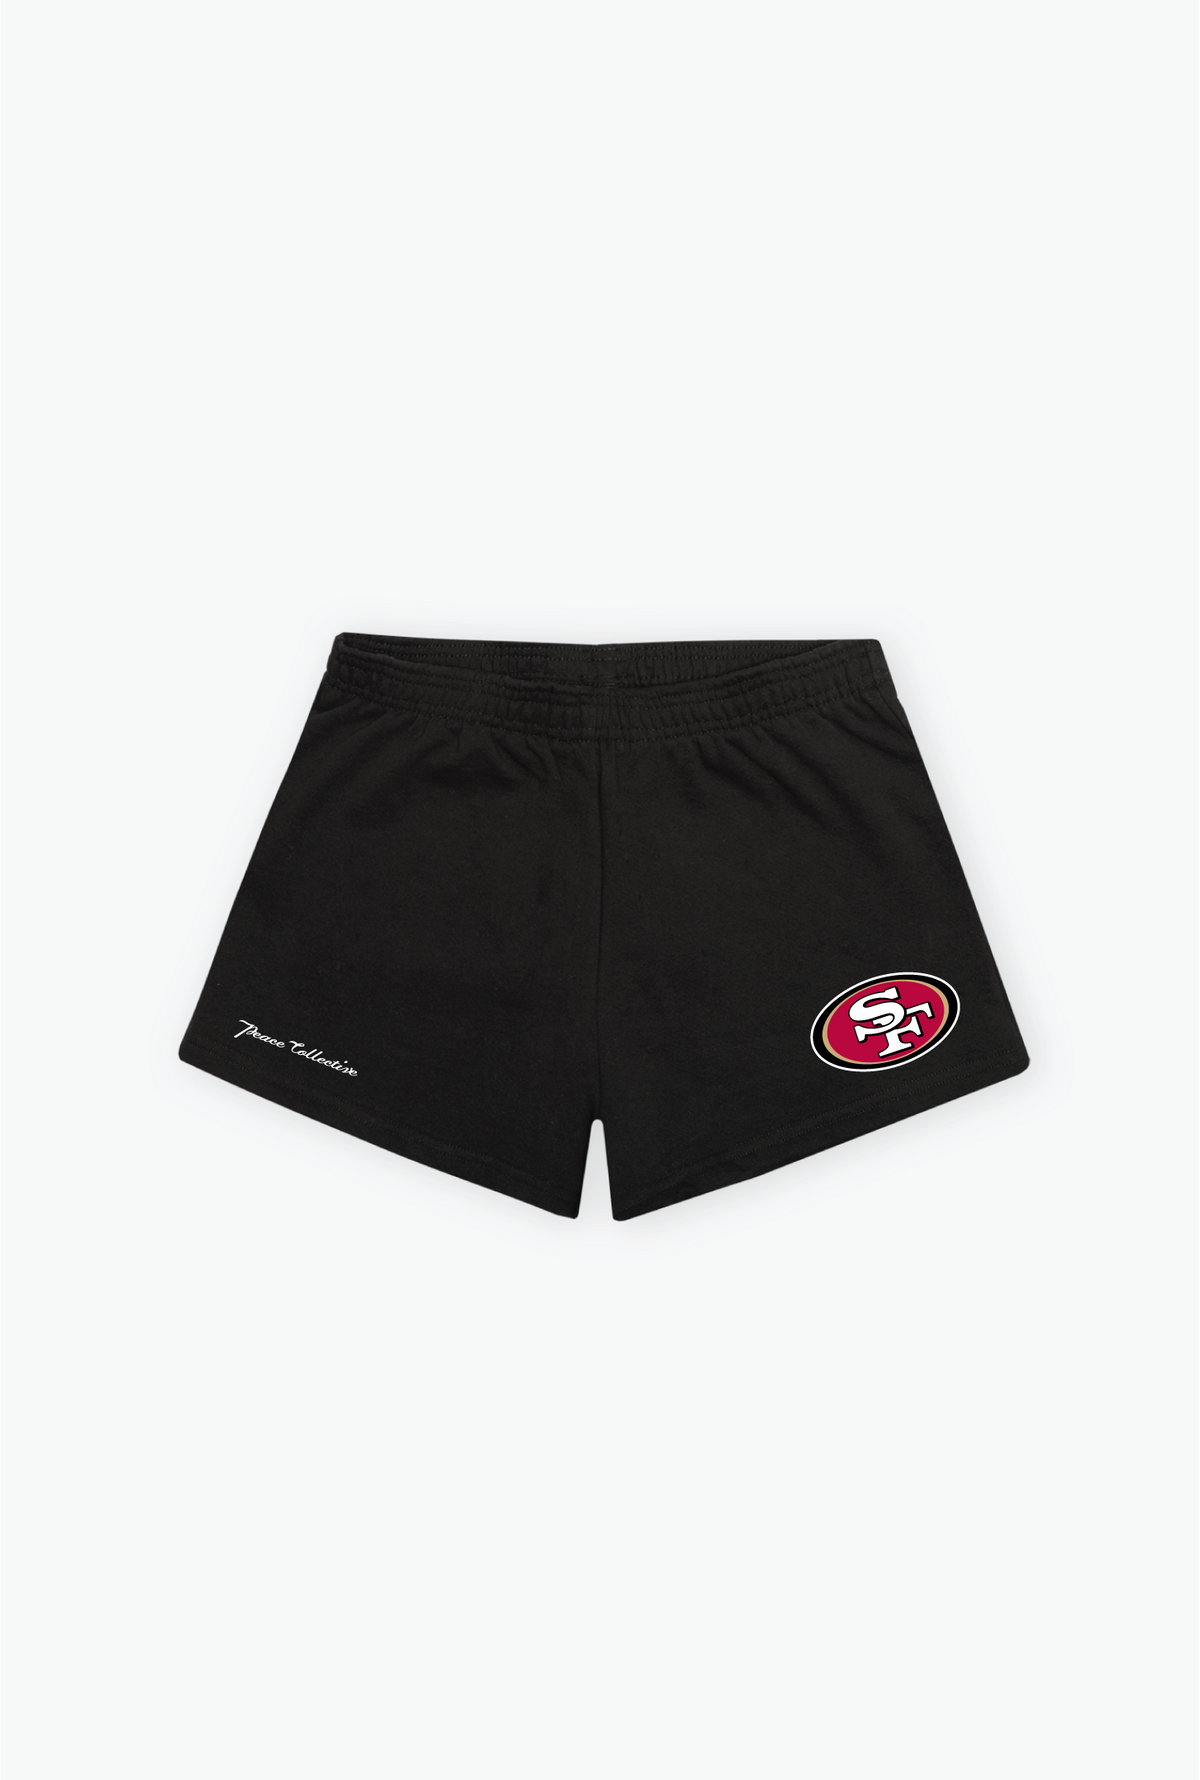 San Francisco 49ers Women's Fleece Shorts - Black